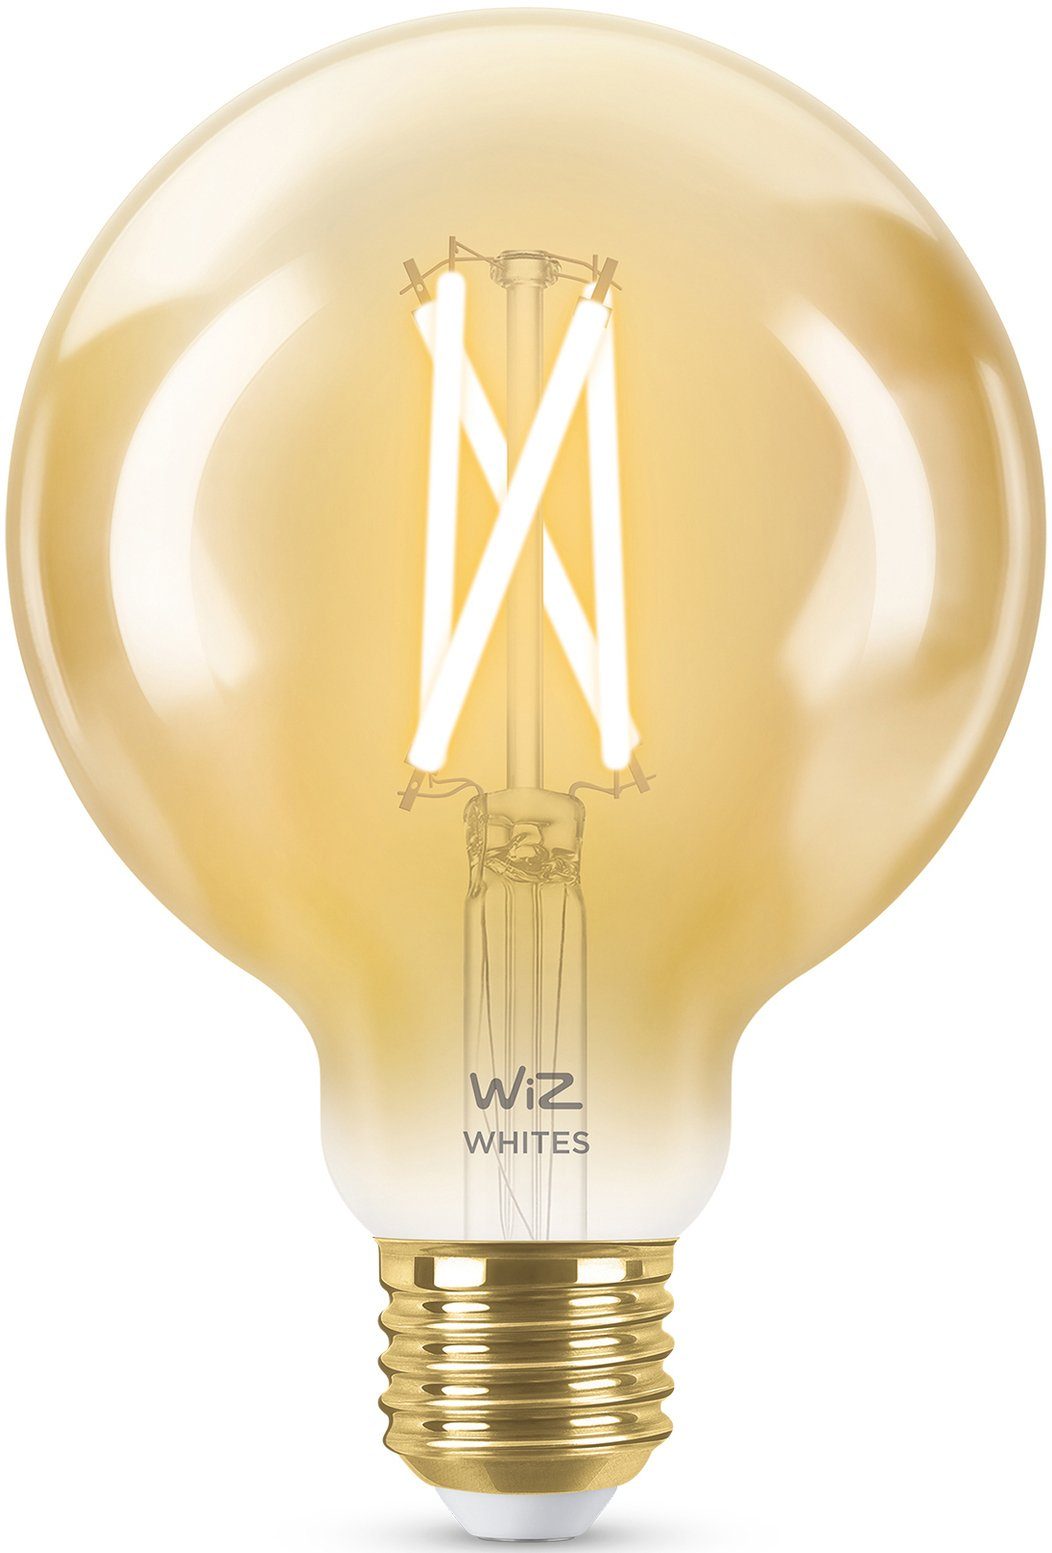 WiZ LED-Filament Filament 50W E27 Vintage-Design klassisches Lampen Warmweiß, LED E27, St., Wiz Tunable 1 Amber für Globeform White Einzelpack, Filament G95